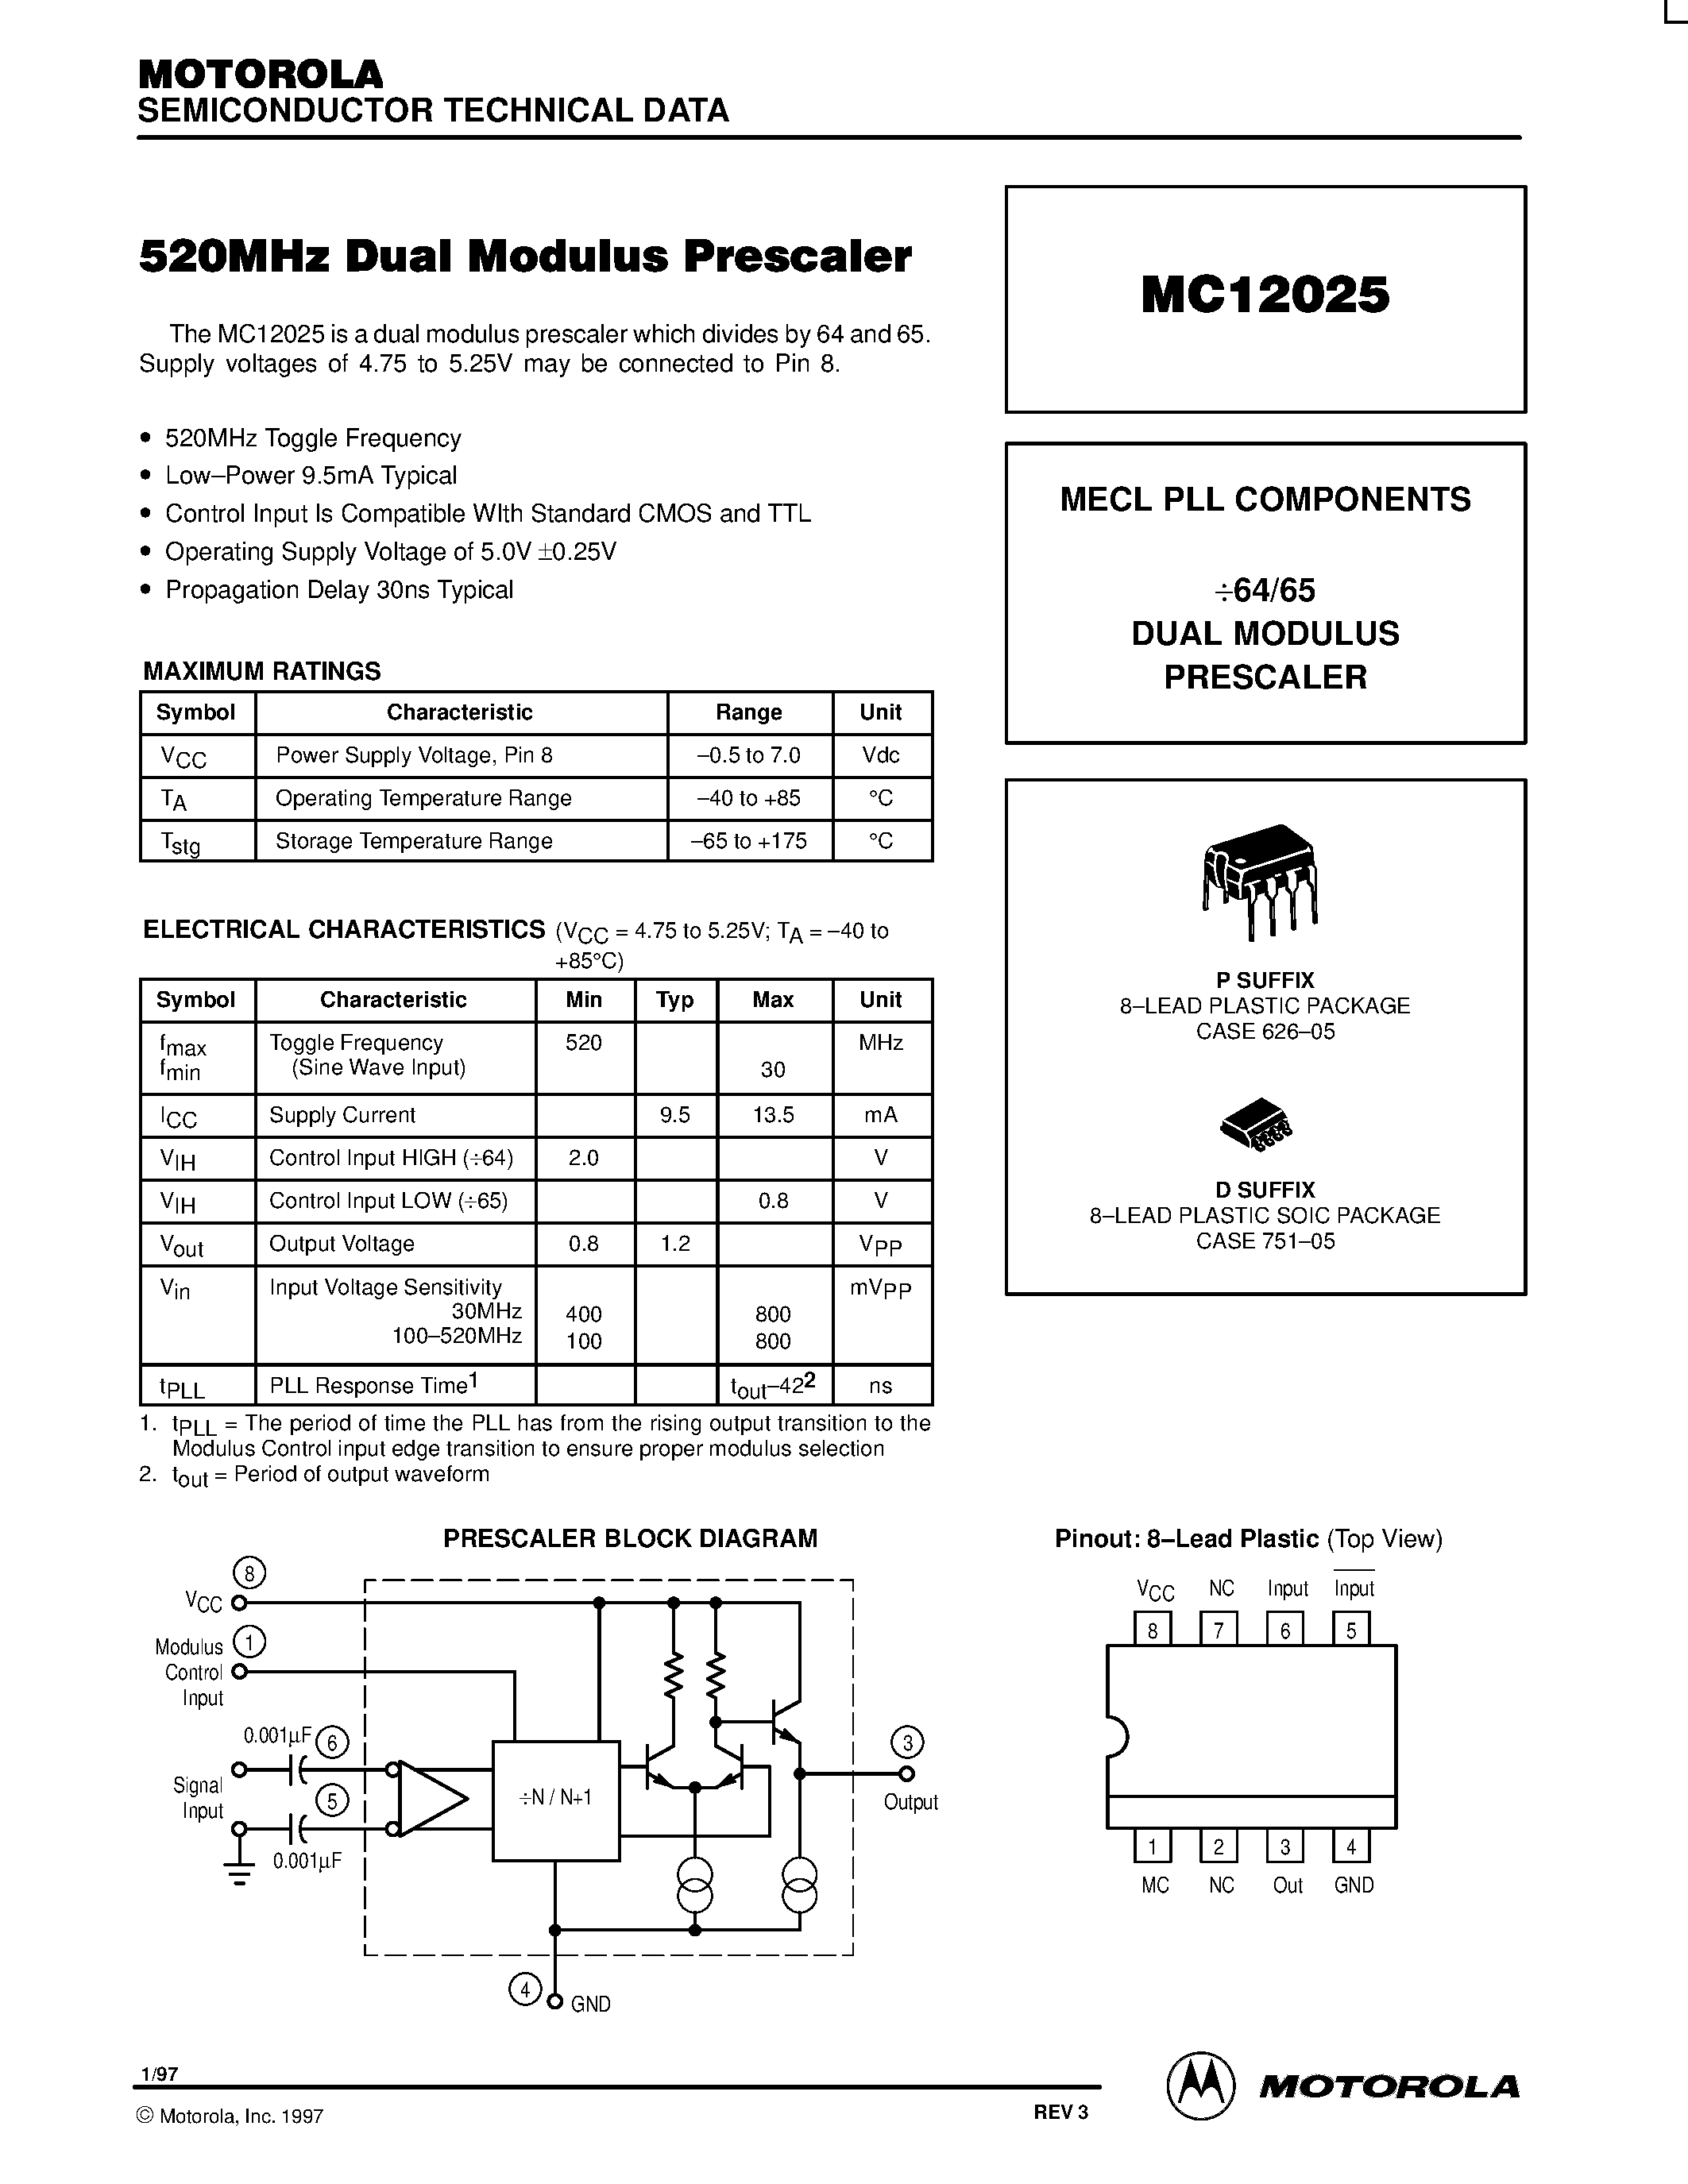 Datasheet MC12025P - MECL PLL COMPONENTS 64/65 DUAL MODULUS PRESCALER page 1